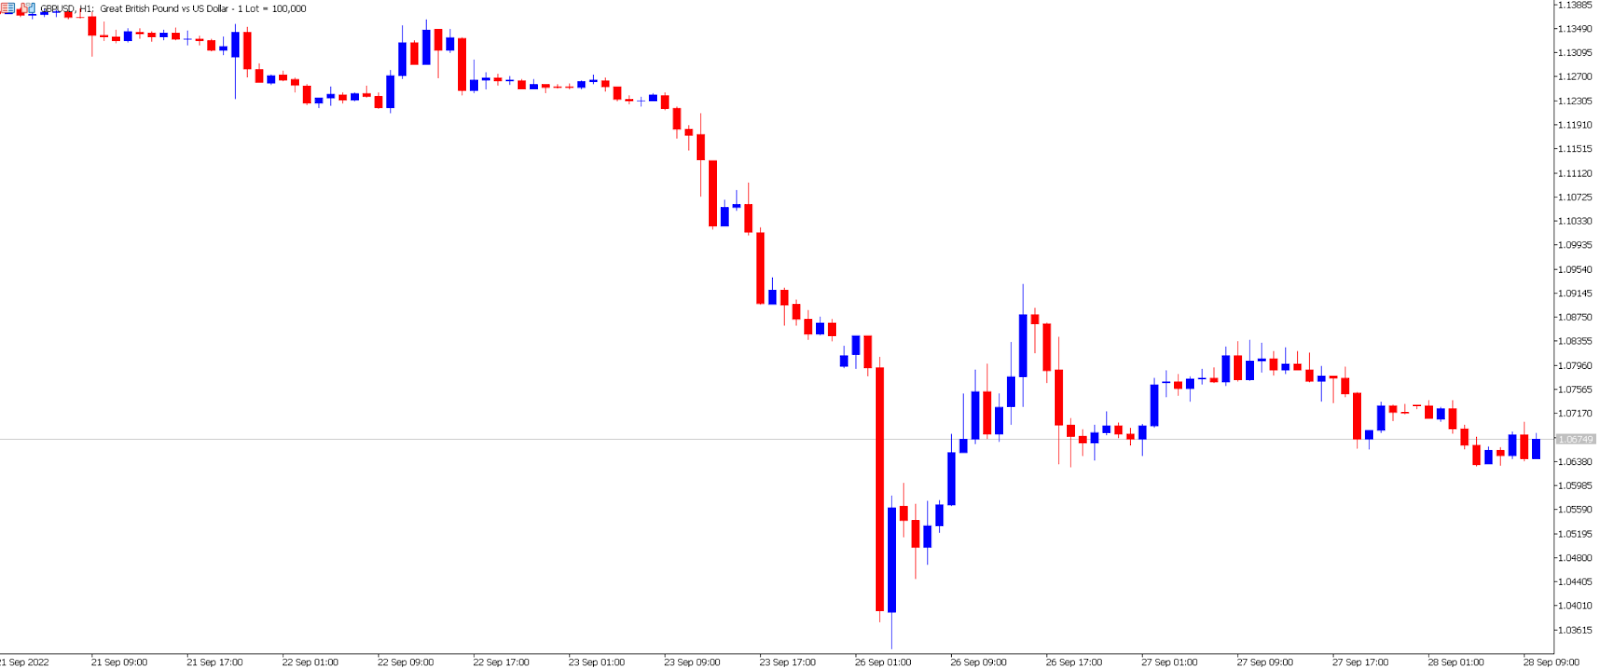 GBP/USD price chart.